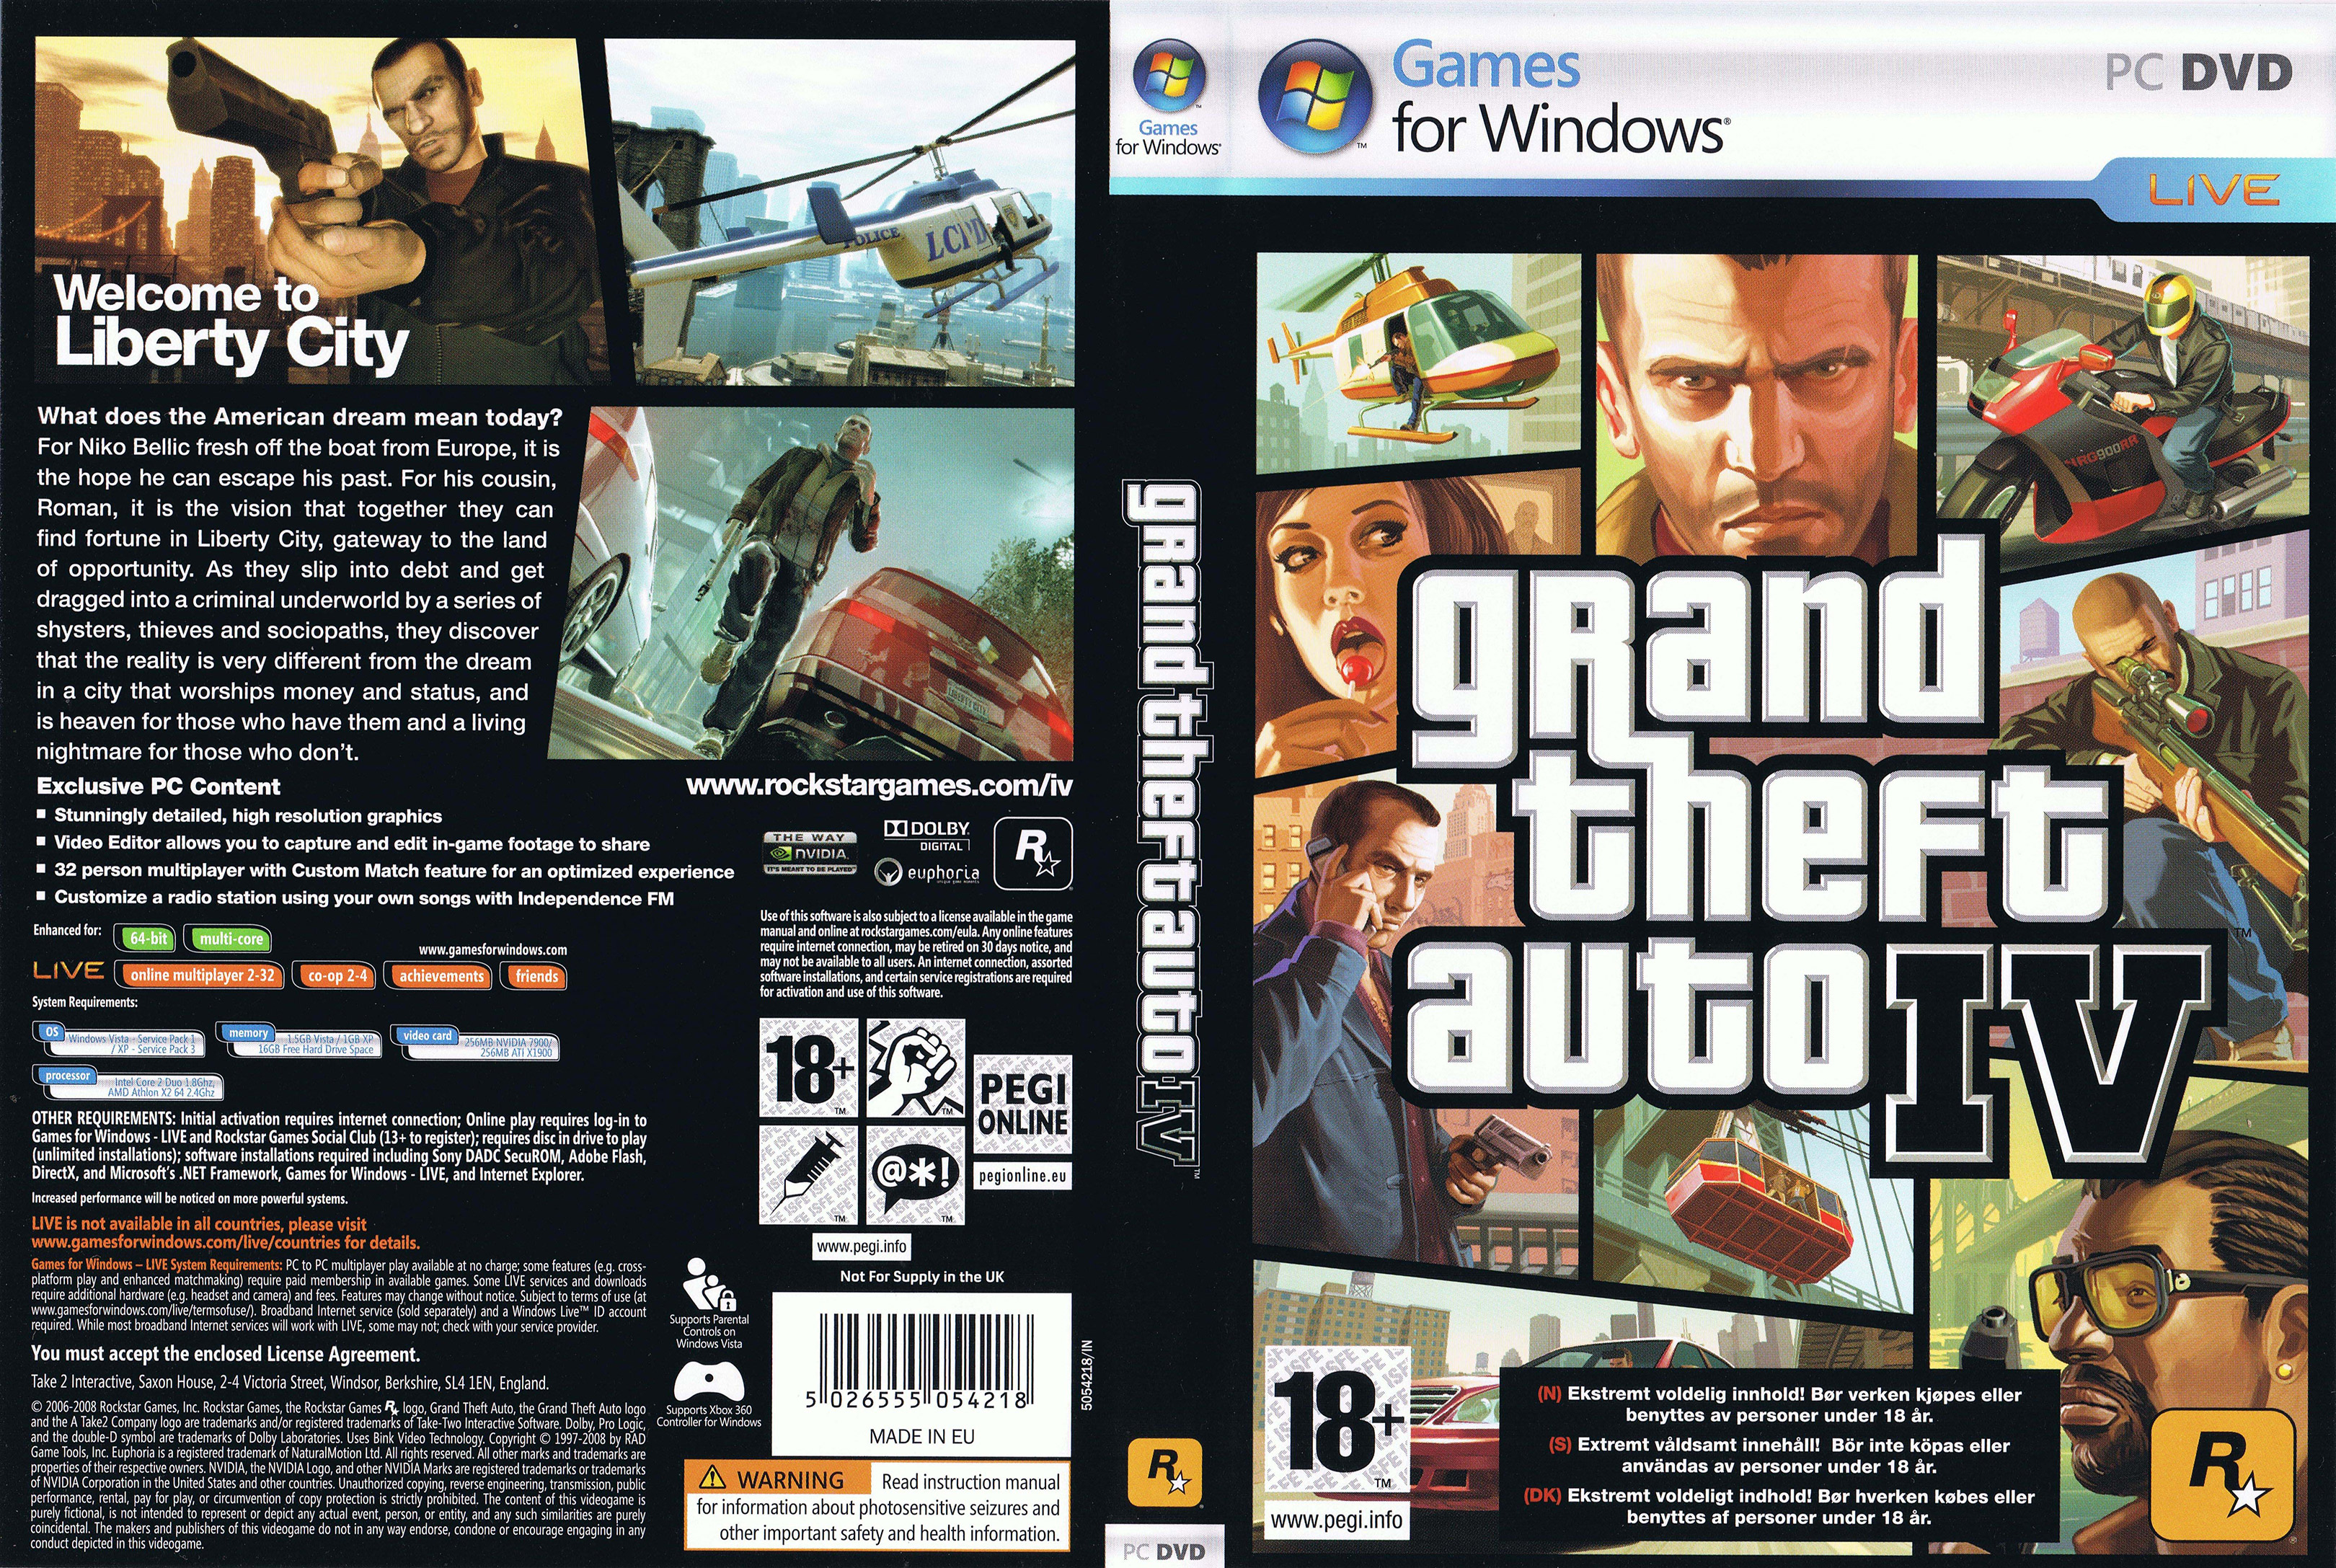 Grand Theft Auto IV - DVD obal